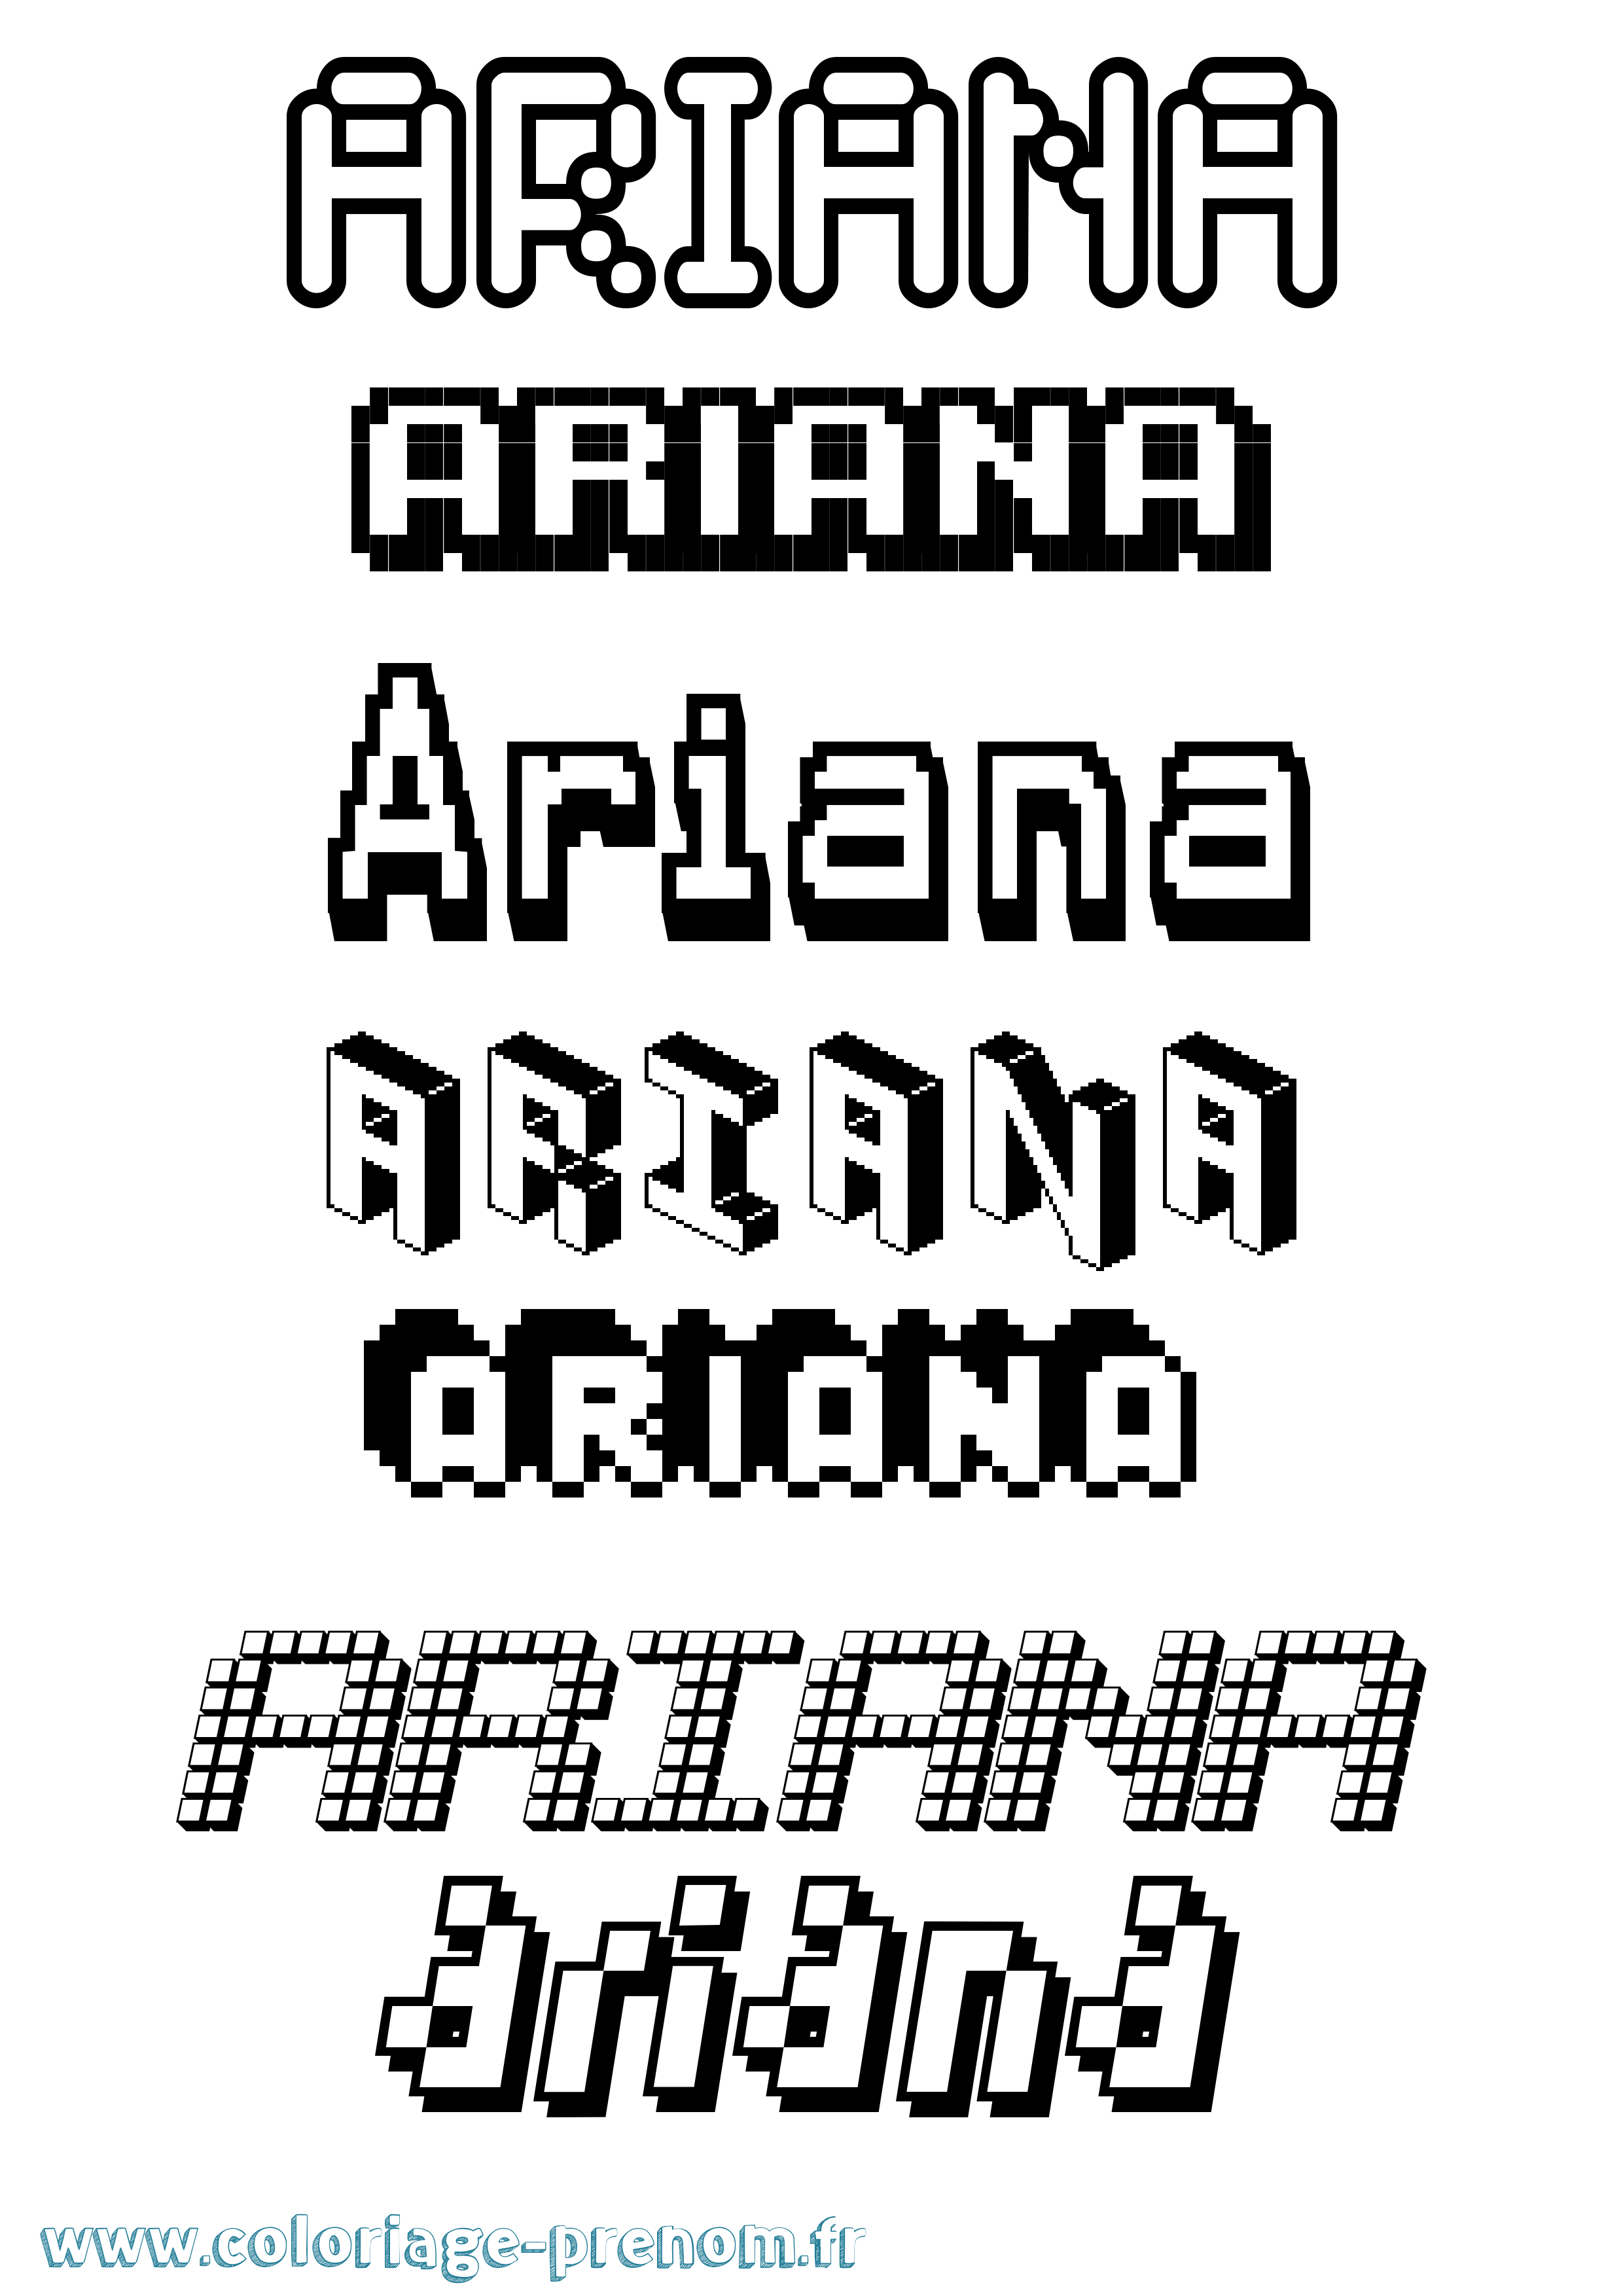 Coloriage prénom Ariana Pixel